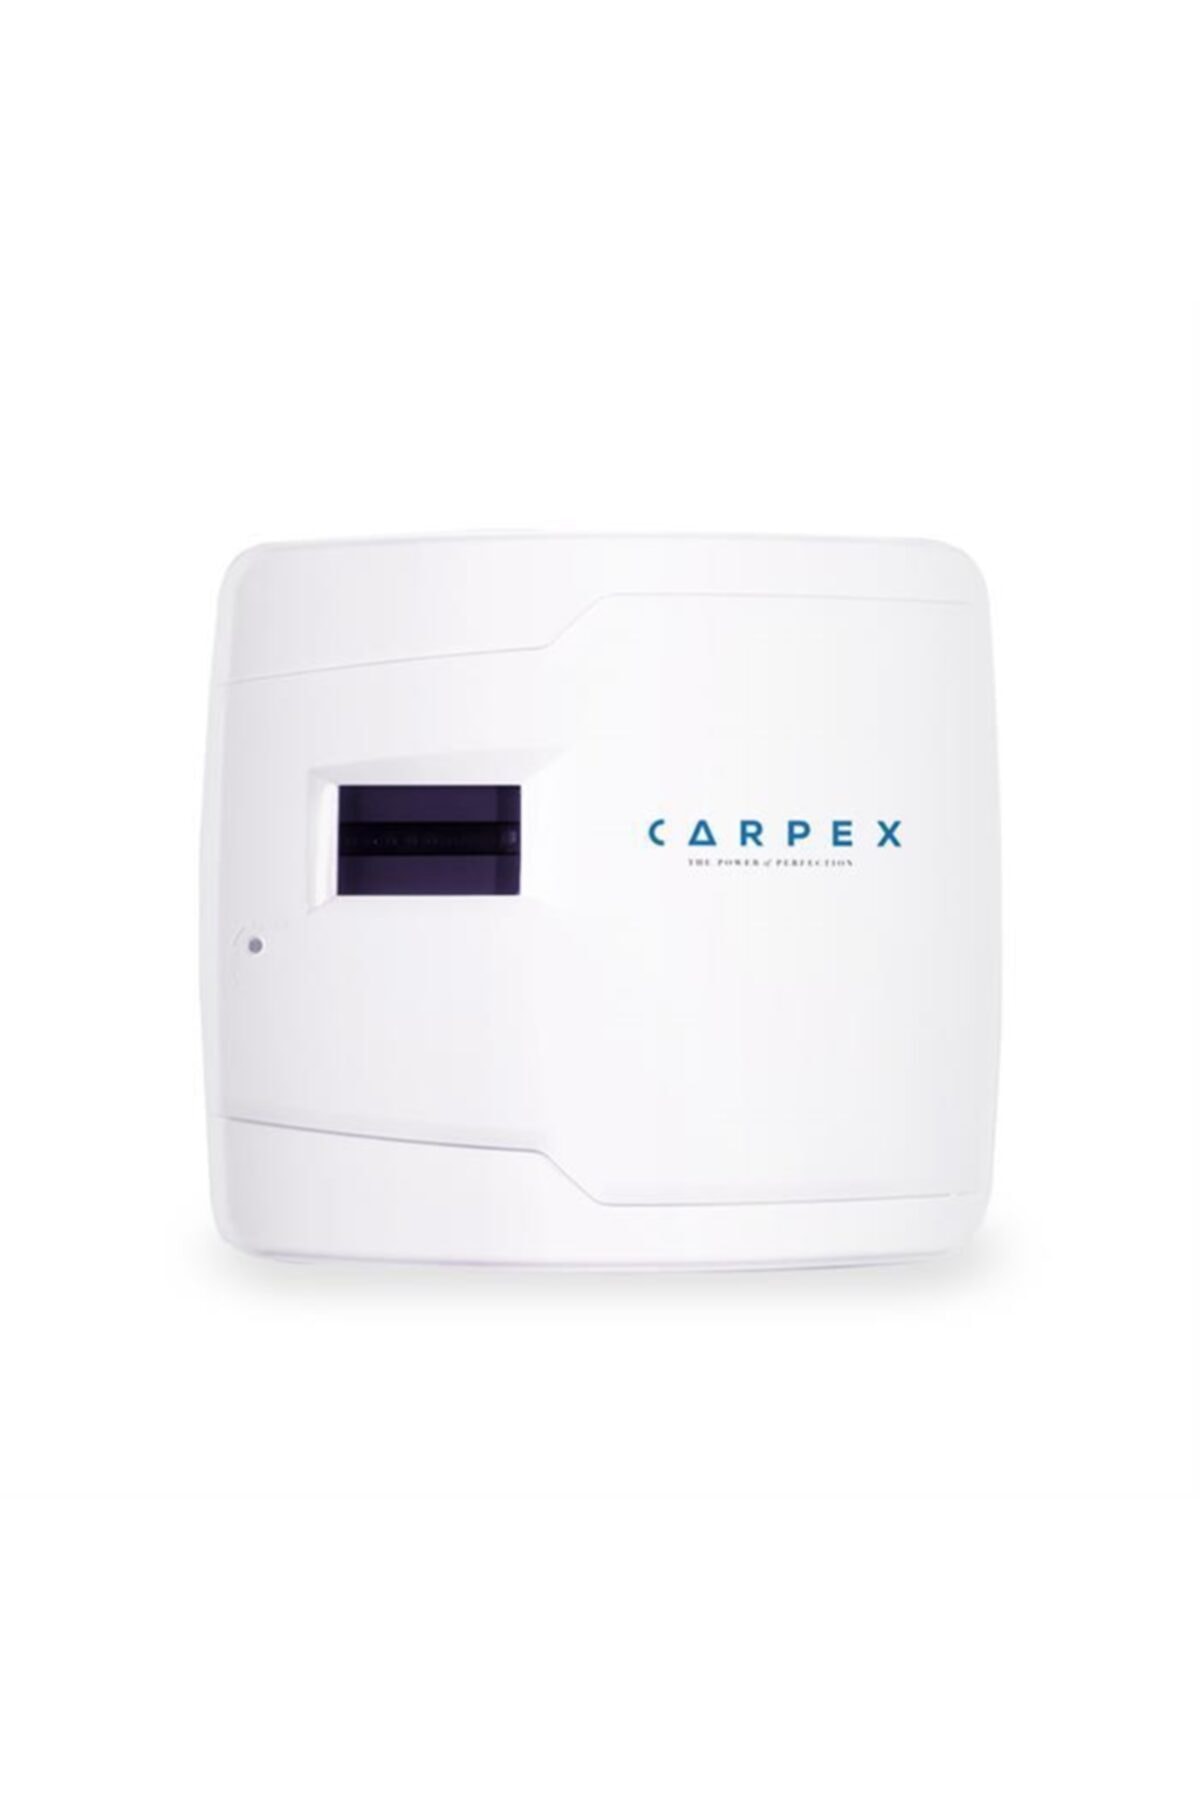 Carpex E2 Power Ev -ofis-ortam Kokulandırma Makinesi